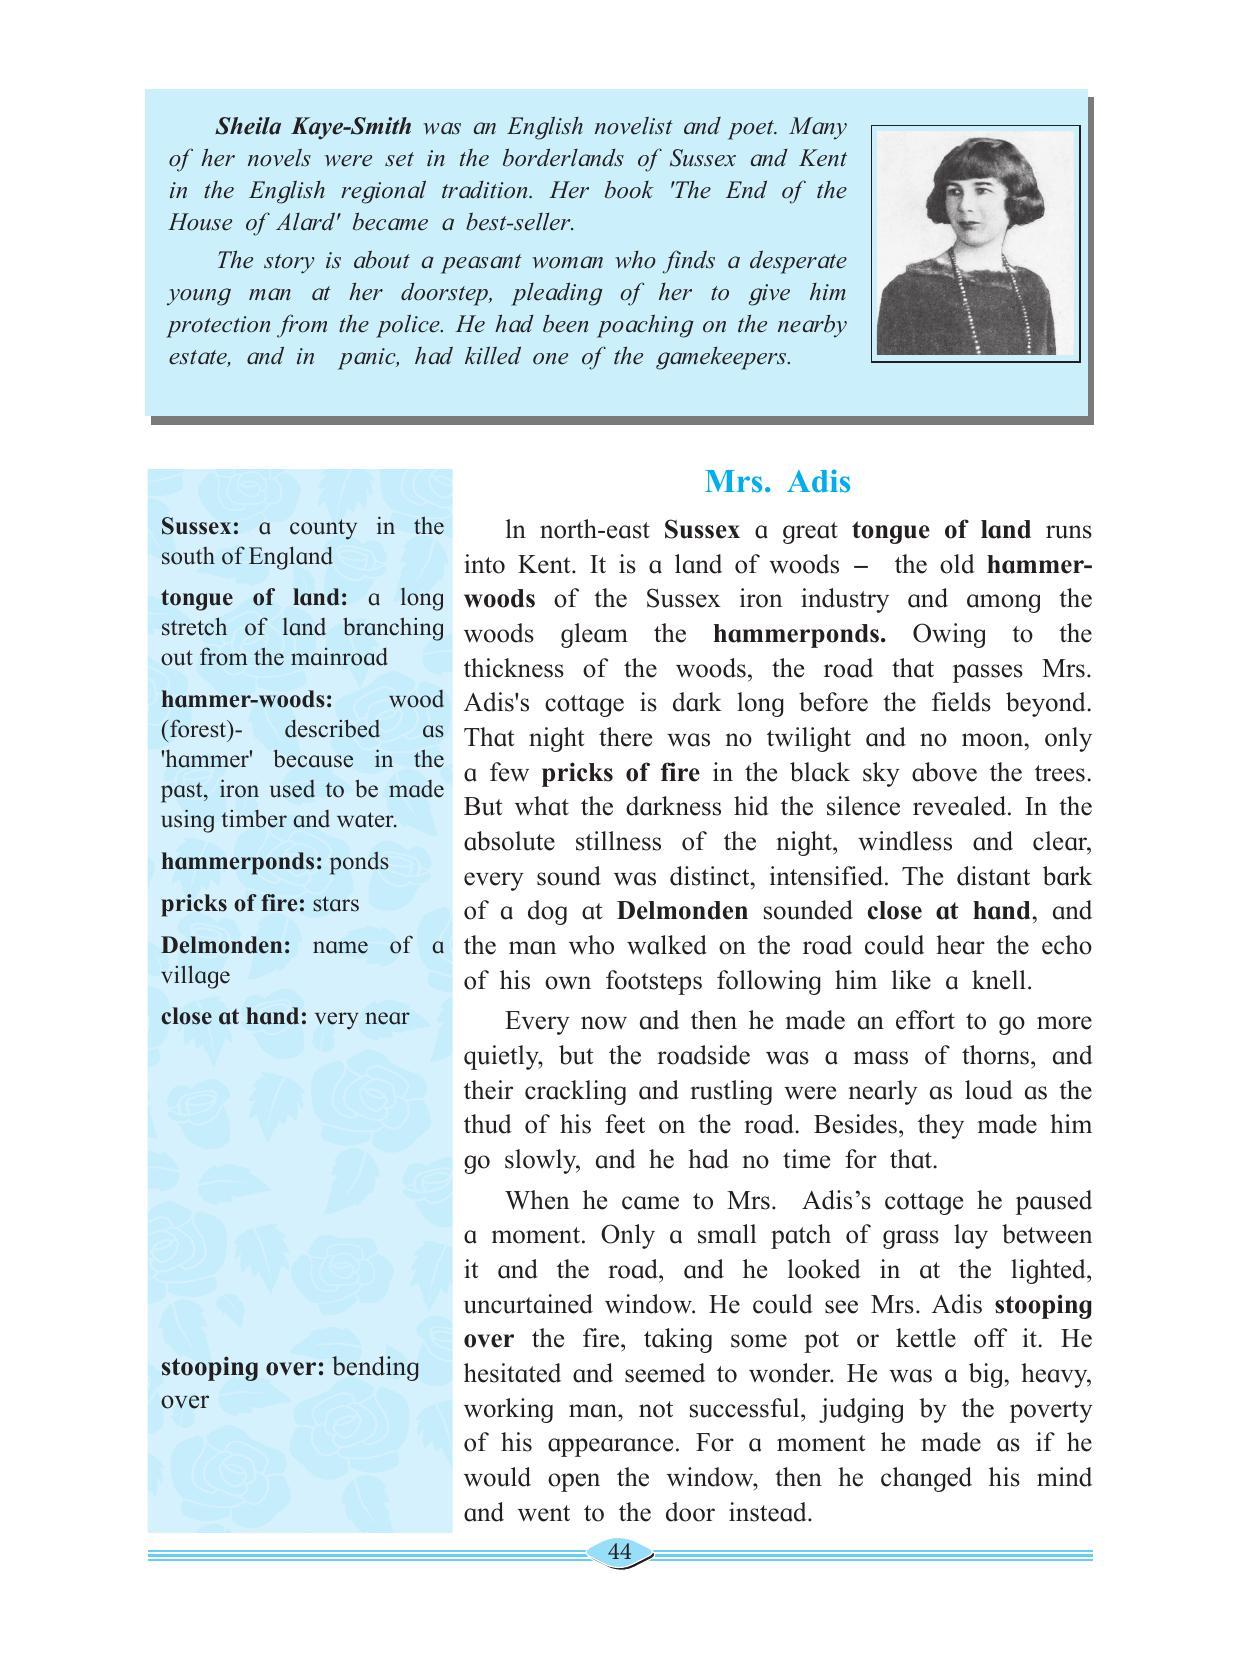 Maharashtra Board Class 11 English Textbook - Page 58